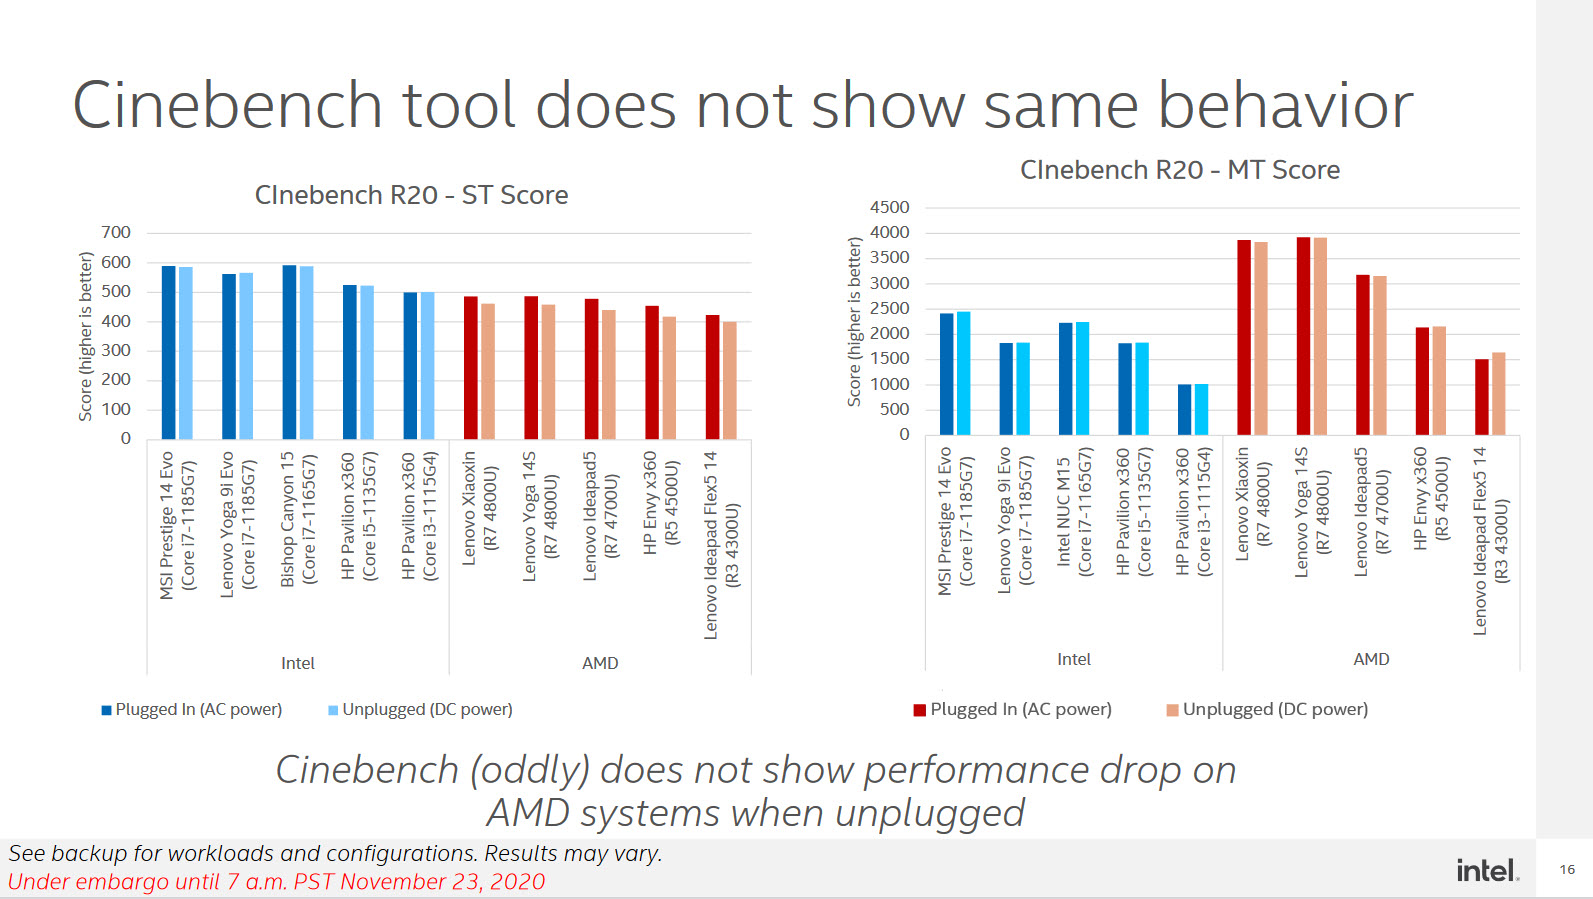 2020 11 24 19 56 46 Intel เปิดเผยซีพียู AMD ที่ใช้งานในแล็ปท็อปมีประสิทธิภาพลดลงเมื่อไม่ต่อไฟเลี้ยงในกรณีใช้งานกับแบตเตอรี่โดยตรง 